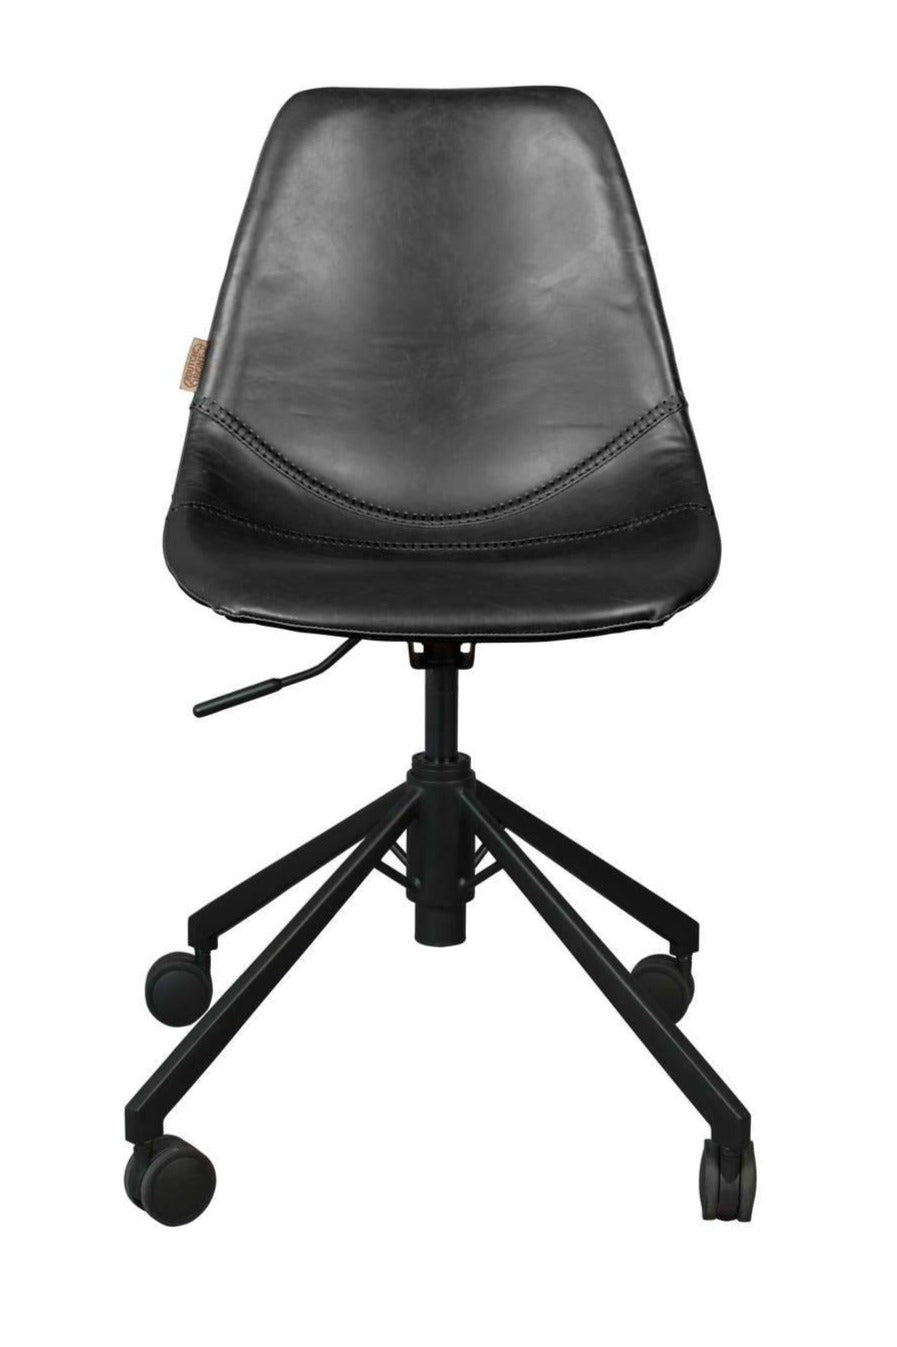 Office chair FRANKY eco leather black, Dutchbone, Eye on Design